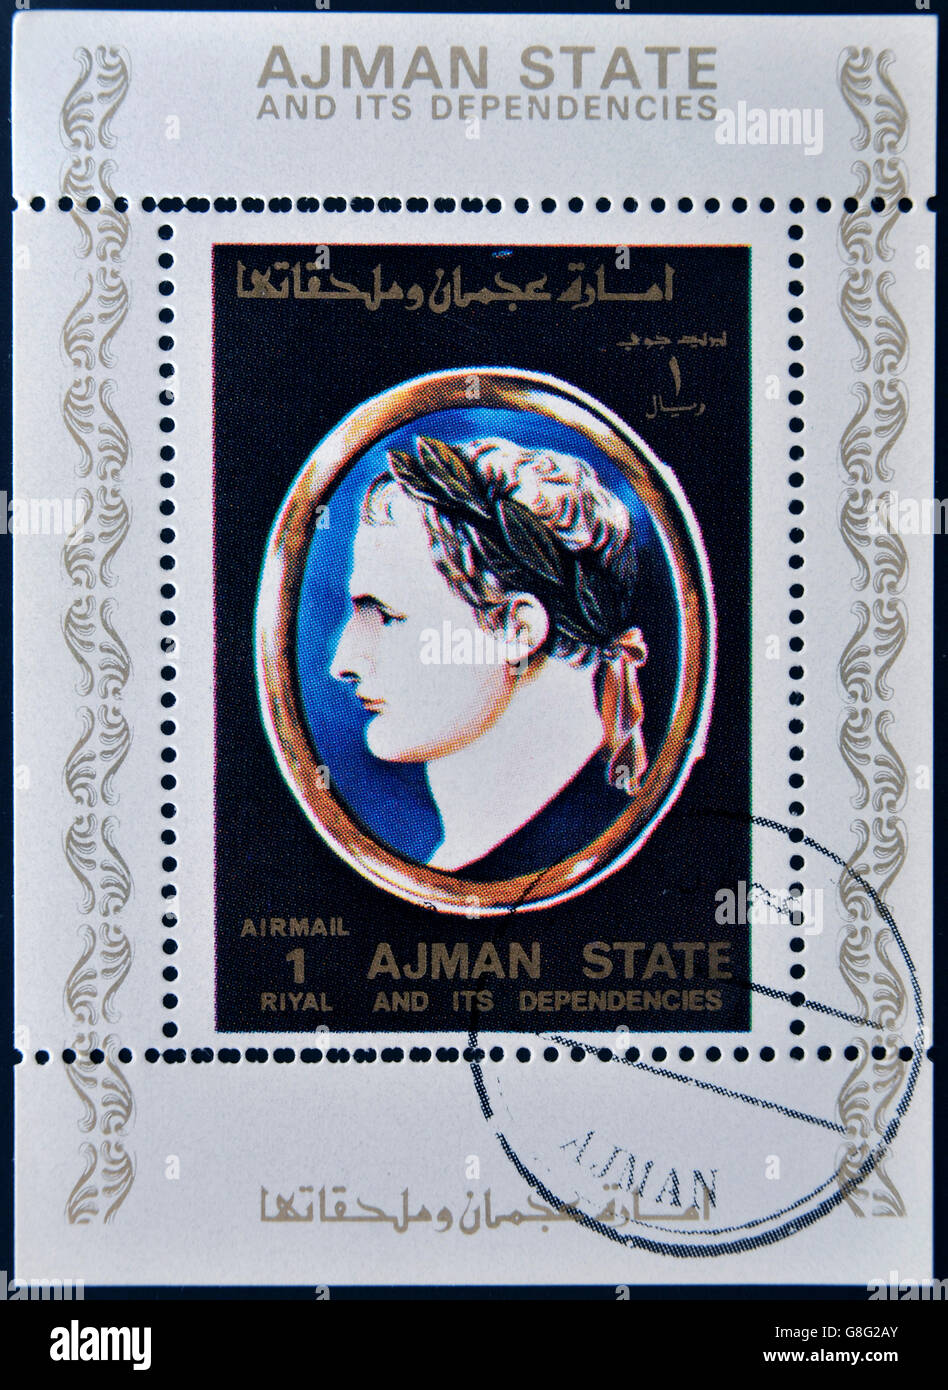 AJMAN STATE - CIRCA 1975: A stamp printed in United Arab Emirates (UAE) shows Julius Caesar, Emperor of Rome, circa 1975 Stock Photo